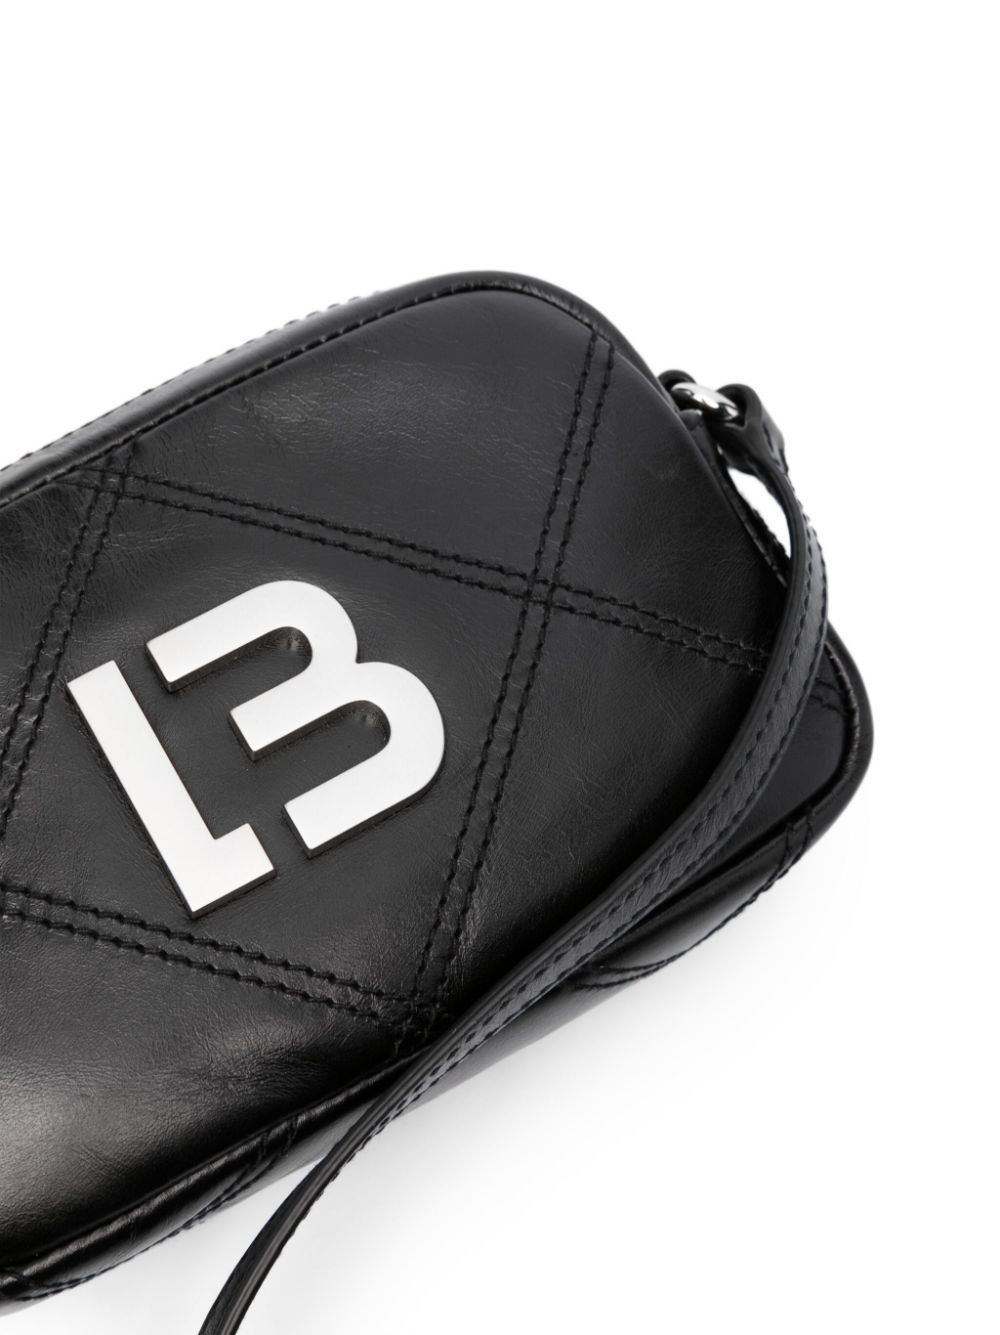 Bimba Y Lola, Bags, Padded Nylon Crossbody Bag In Black Small Model With  Long Chain Strap